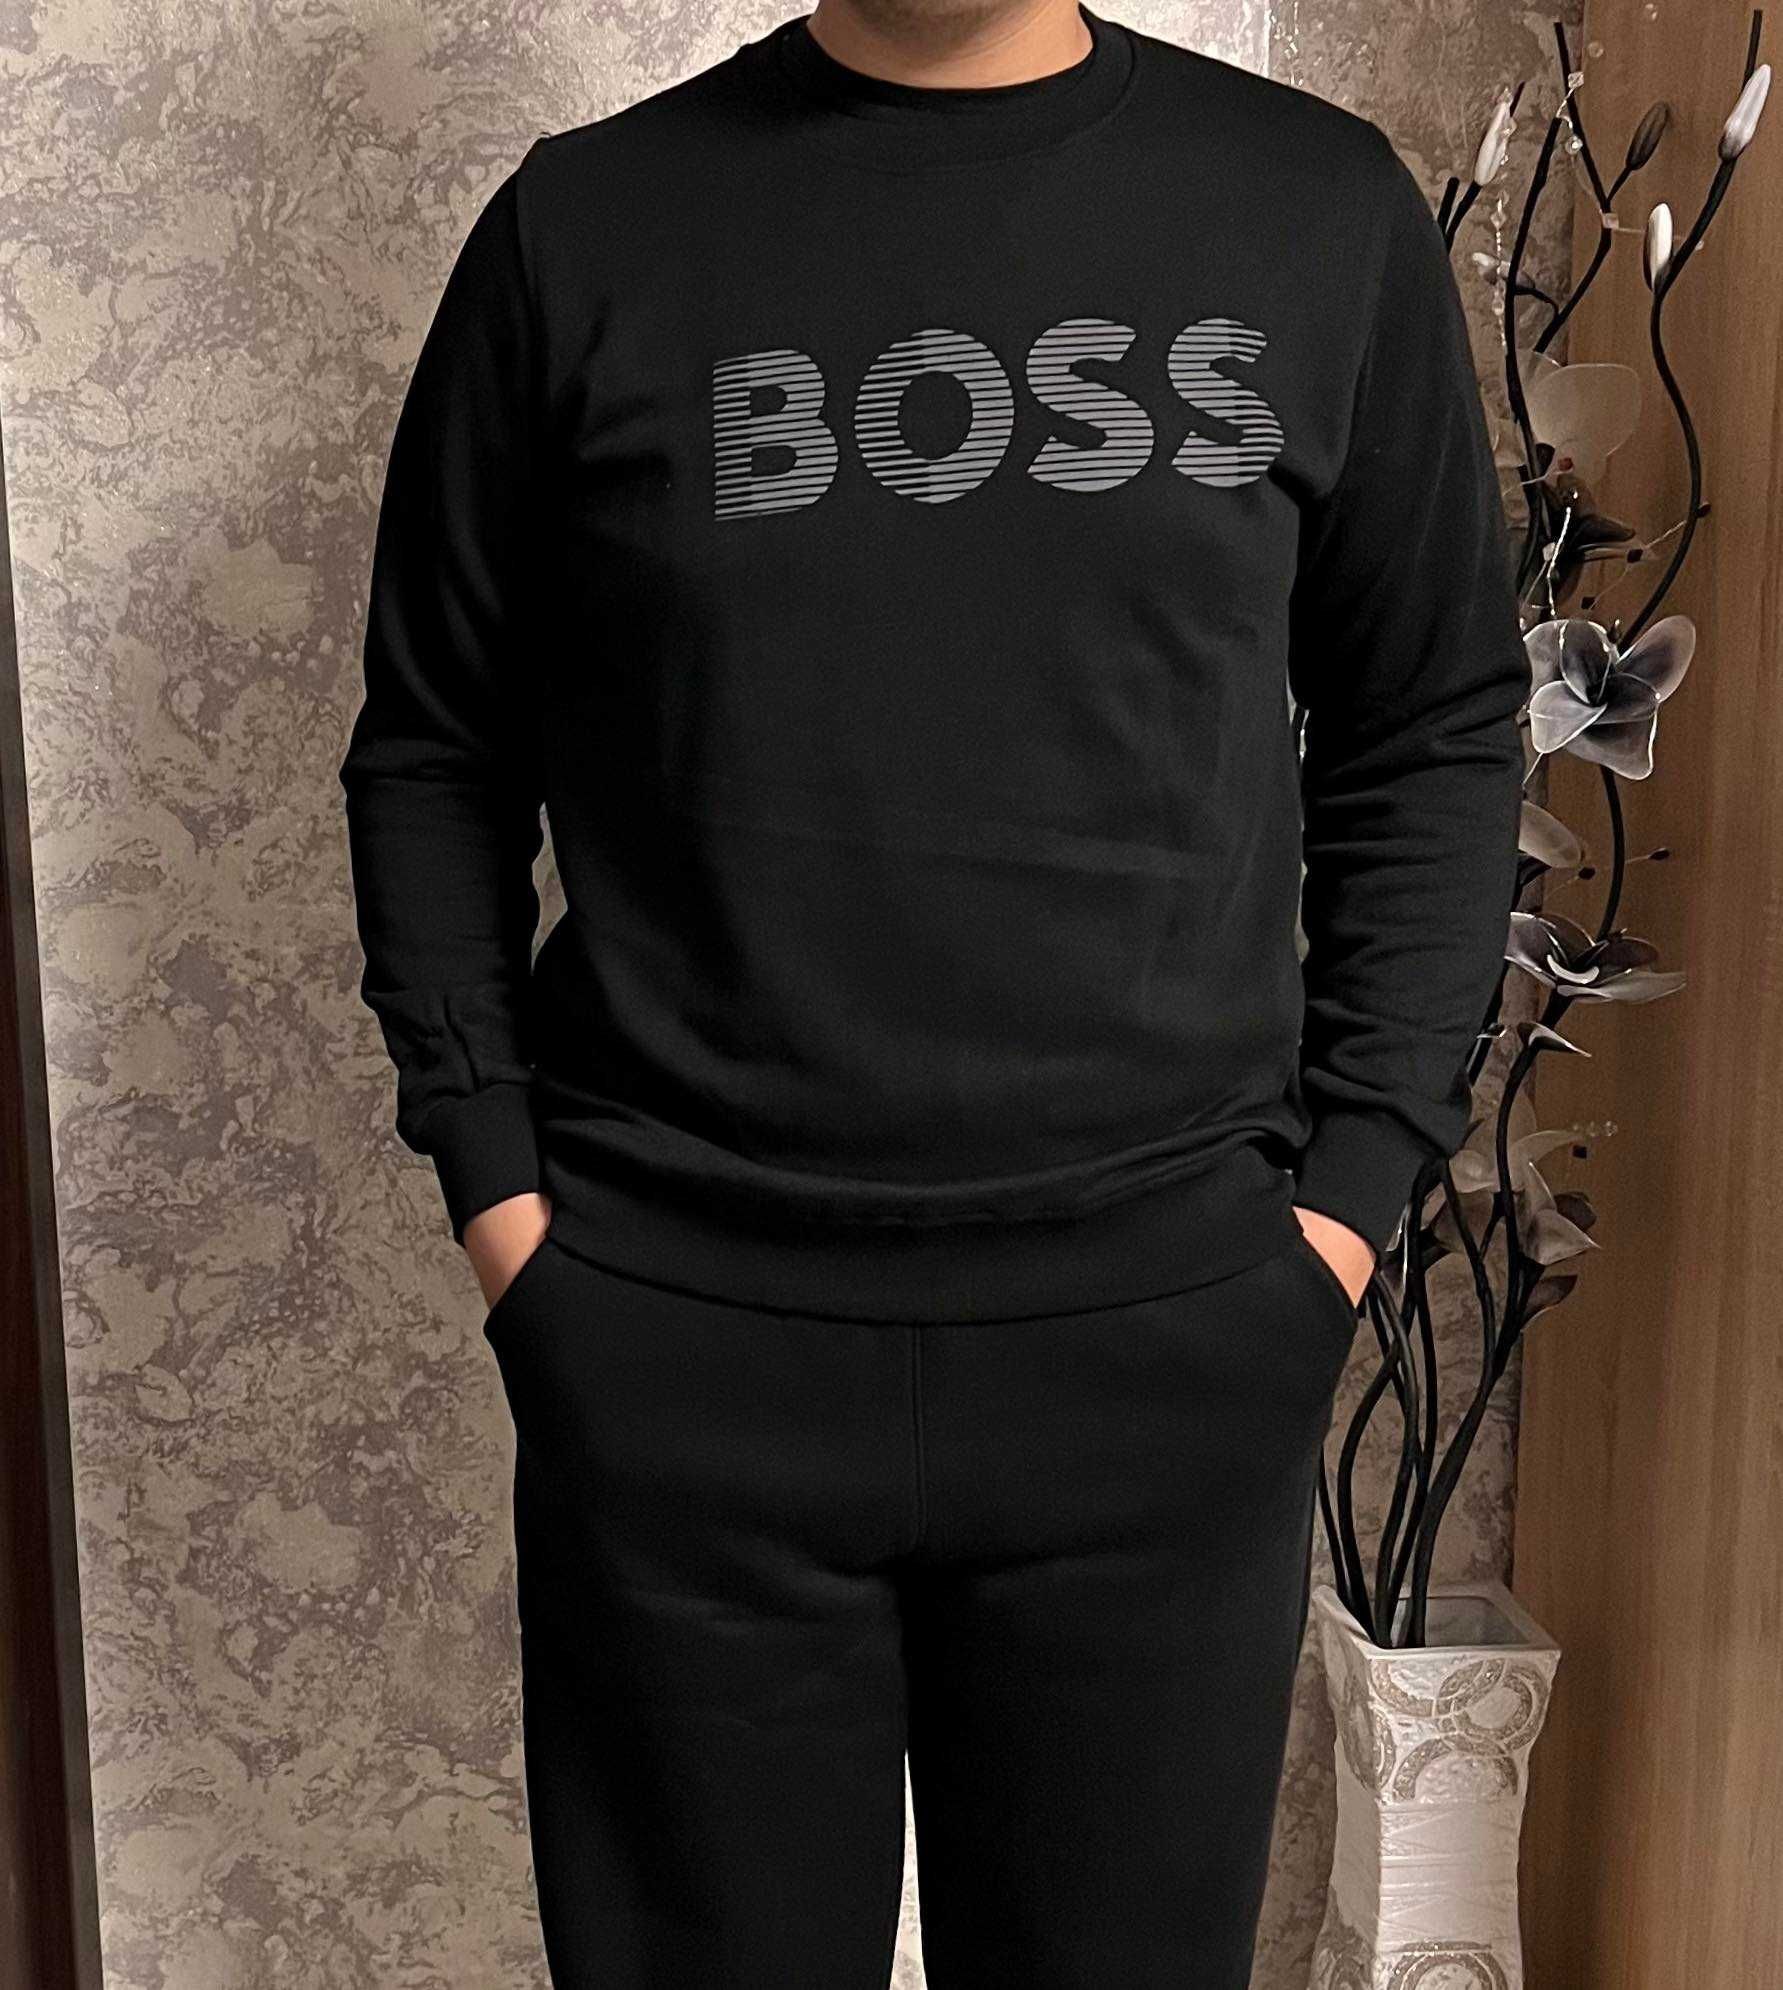 Мъжки блузи Nike, Boss и Calvin Klein